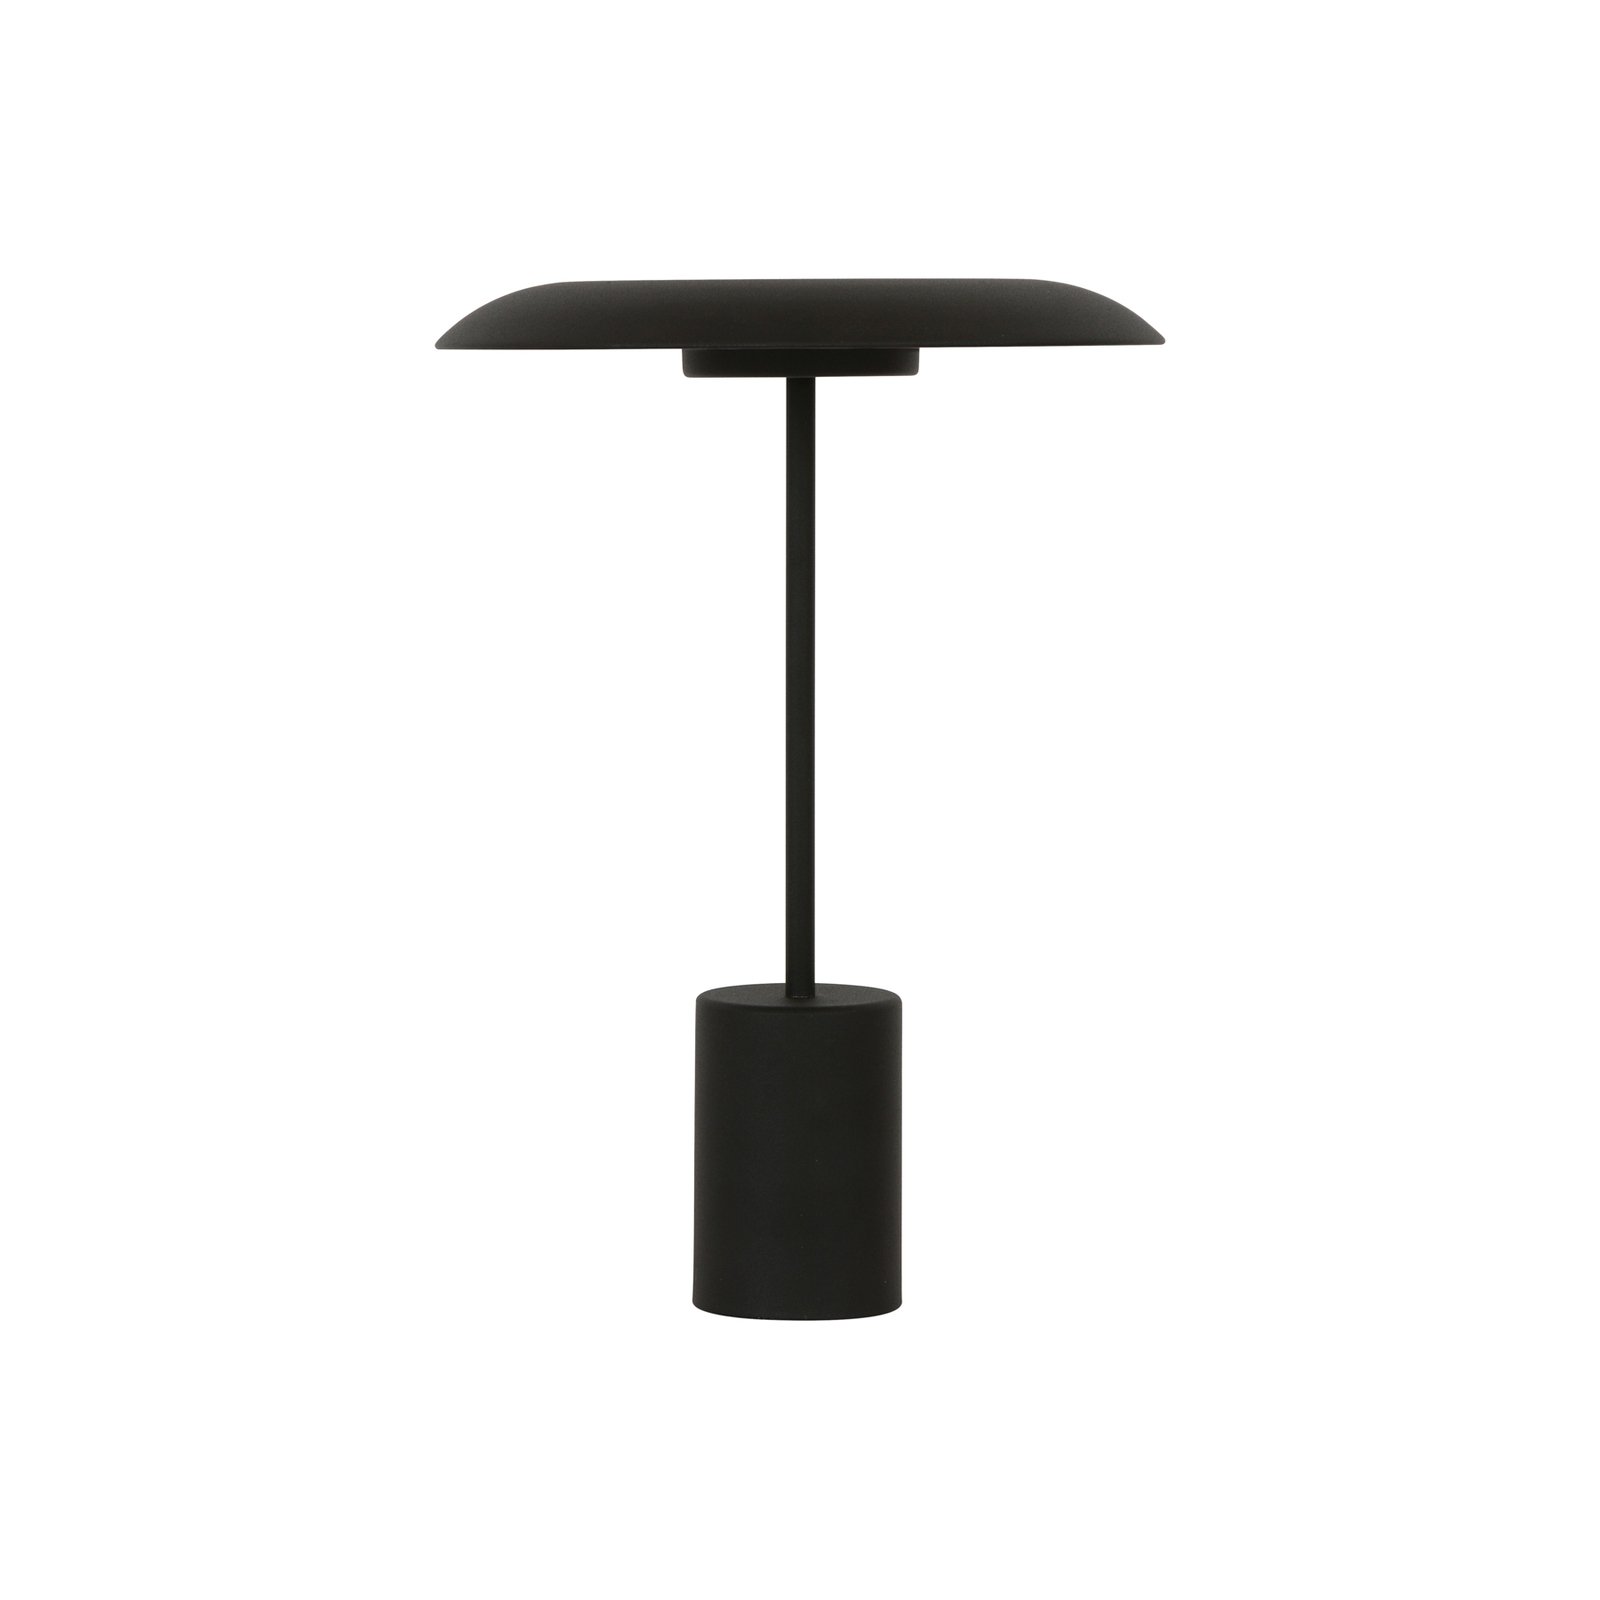 Beacon LED tafellamp Smith, zwart, metaal, USB-poort